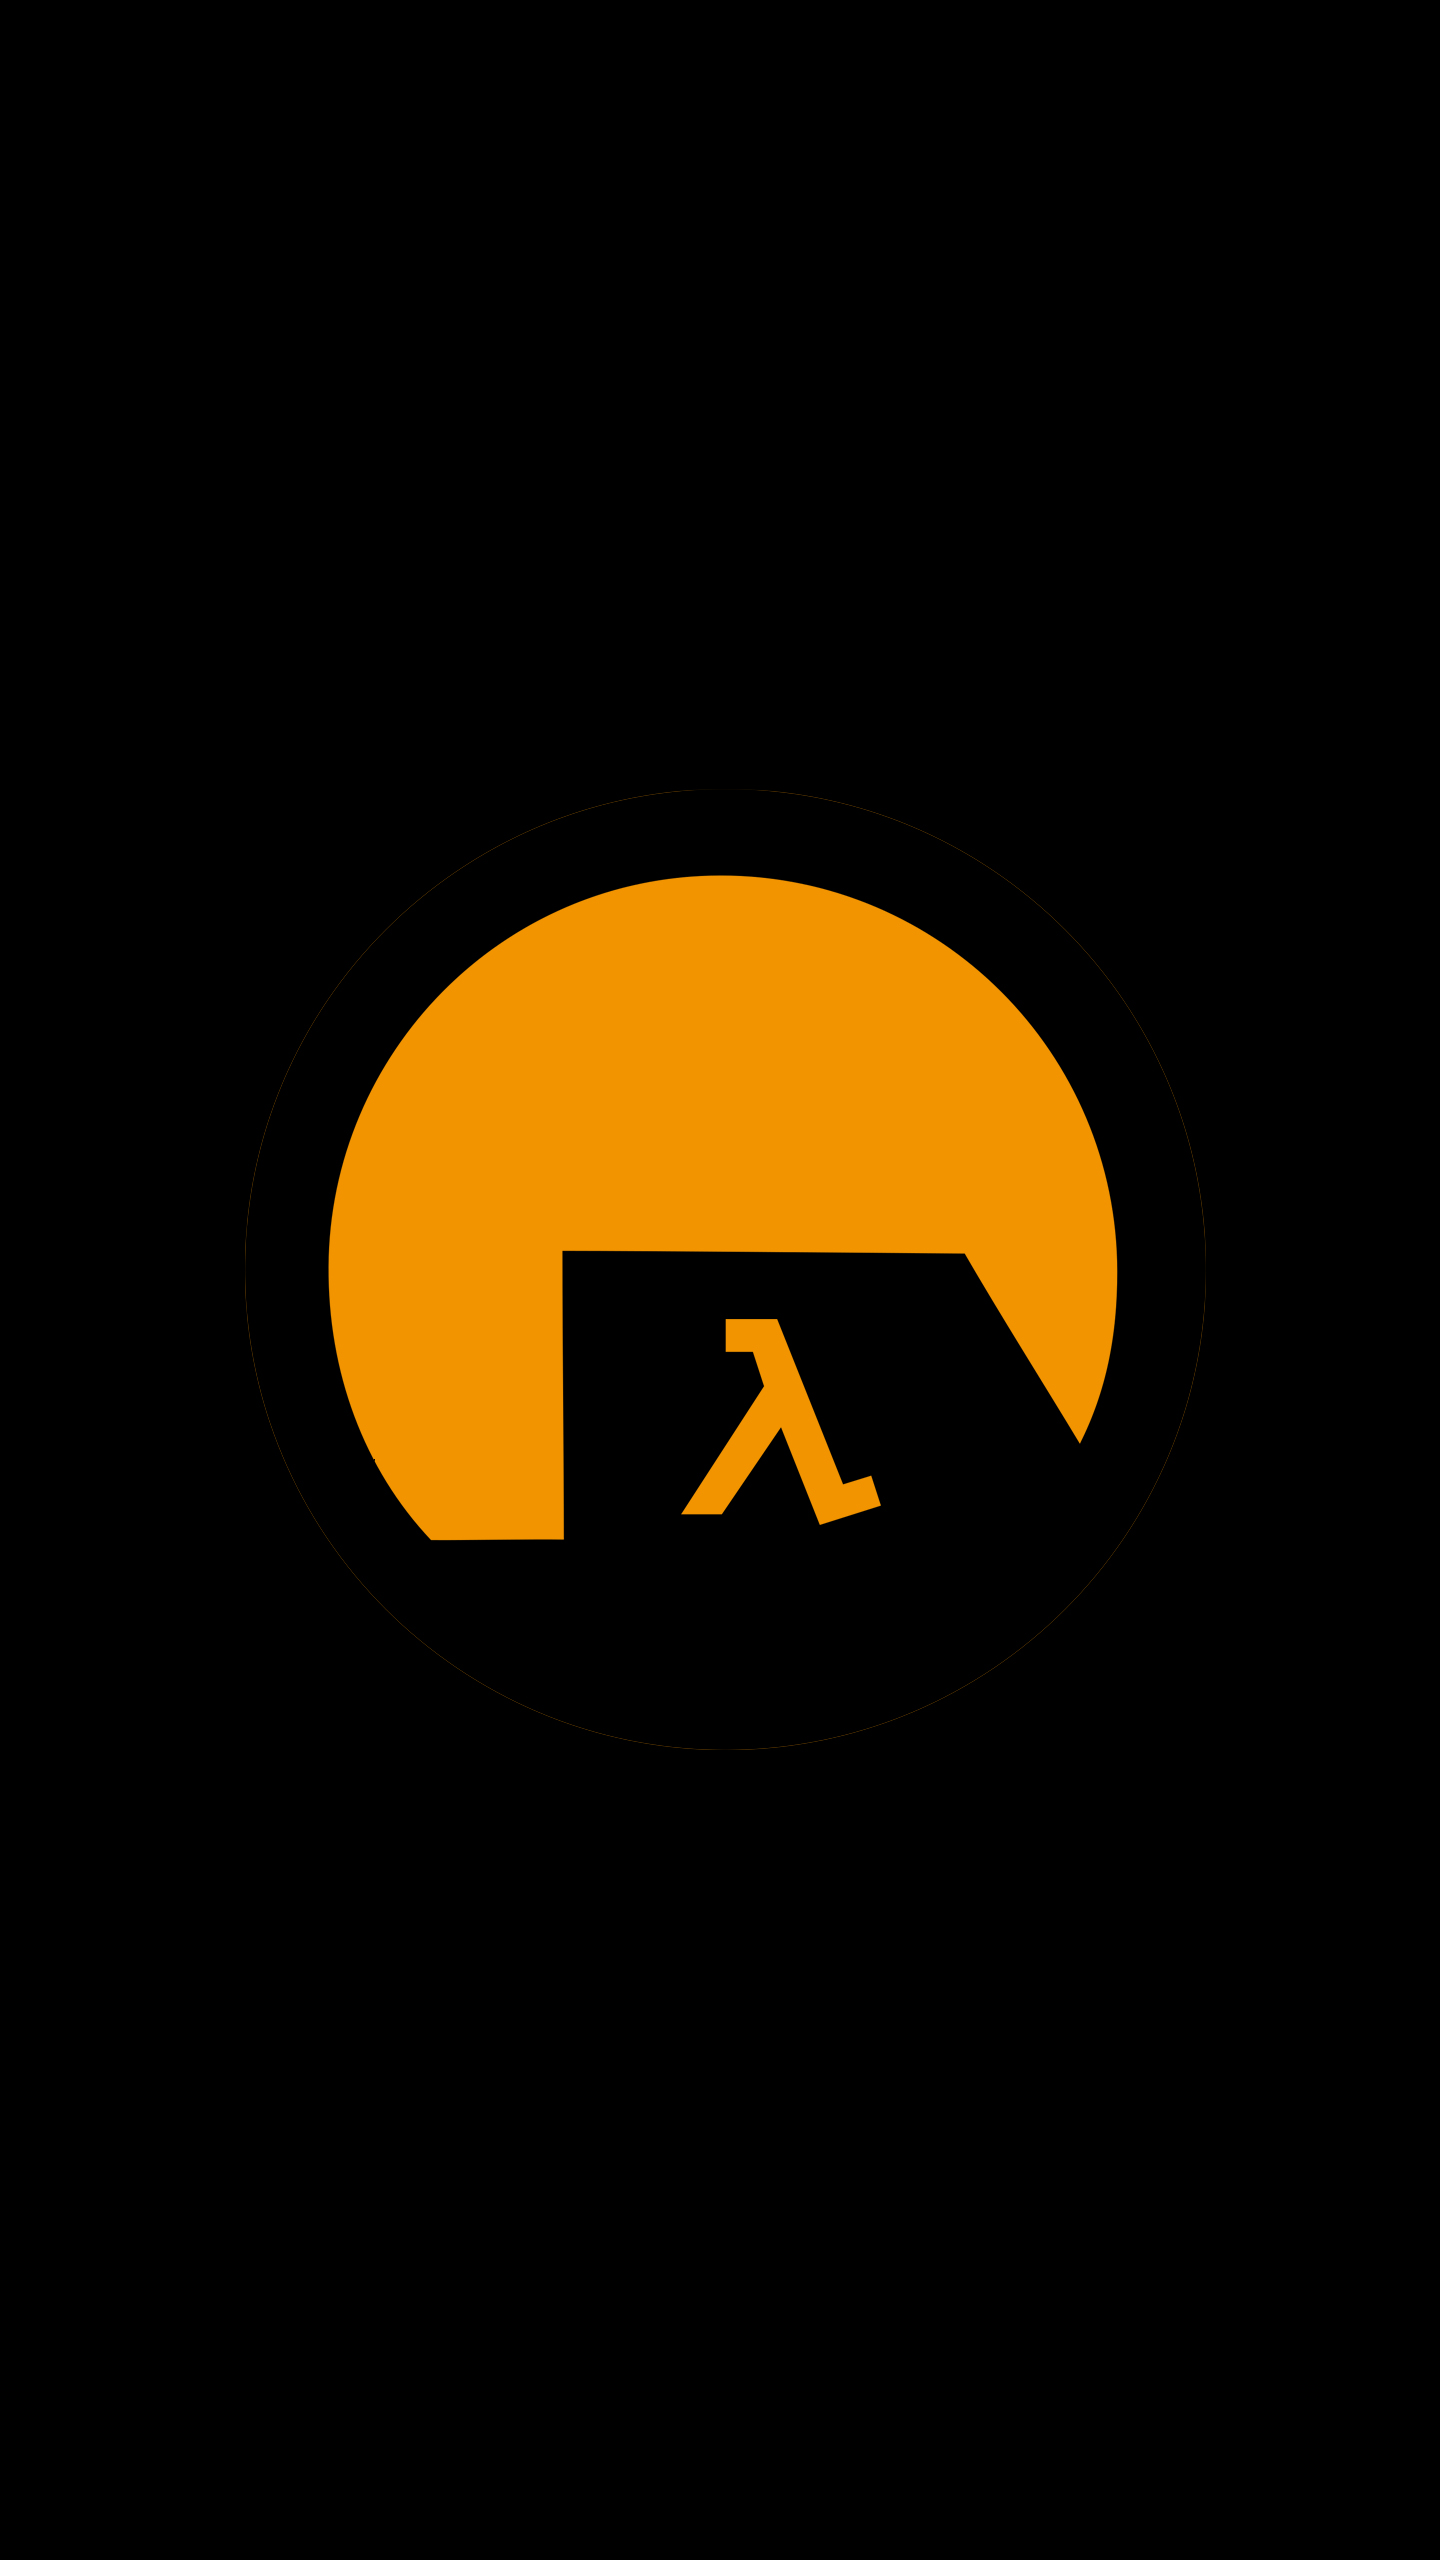 Half Life Black Mesa minimalist logo QHD 2 by adoncy56 on DeviantArt